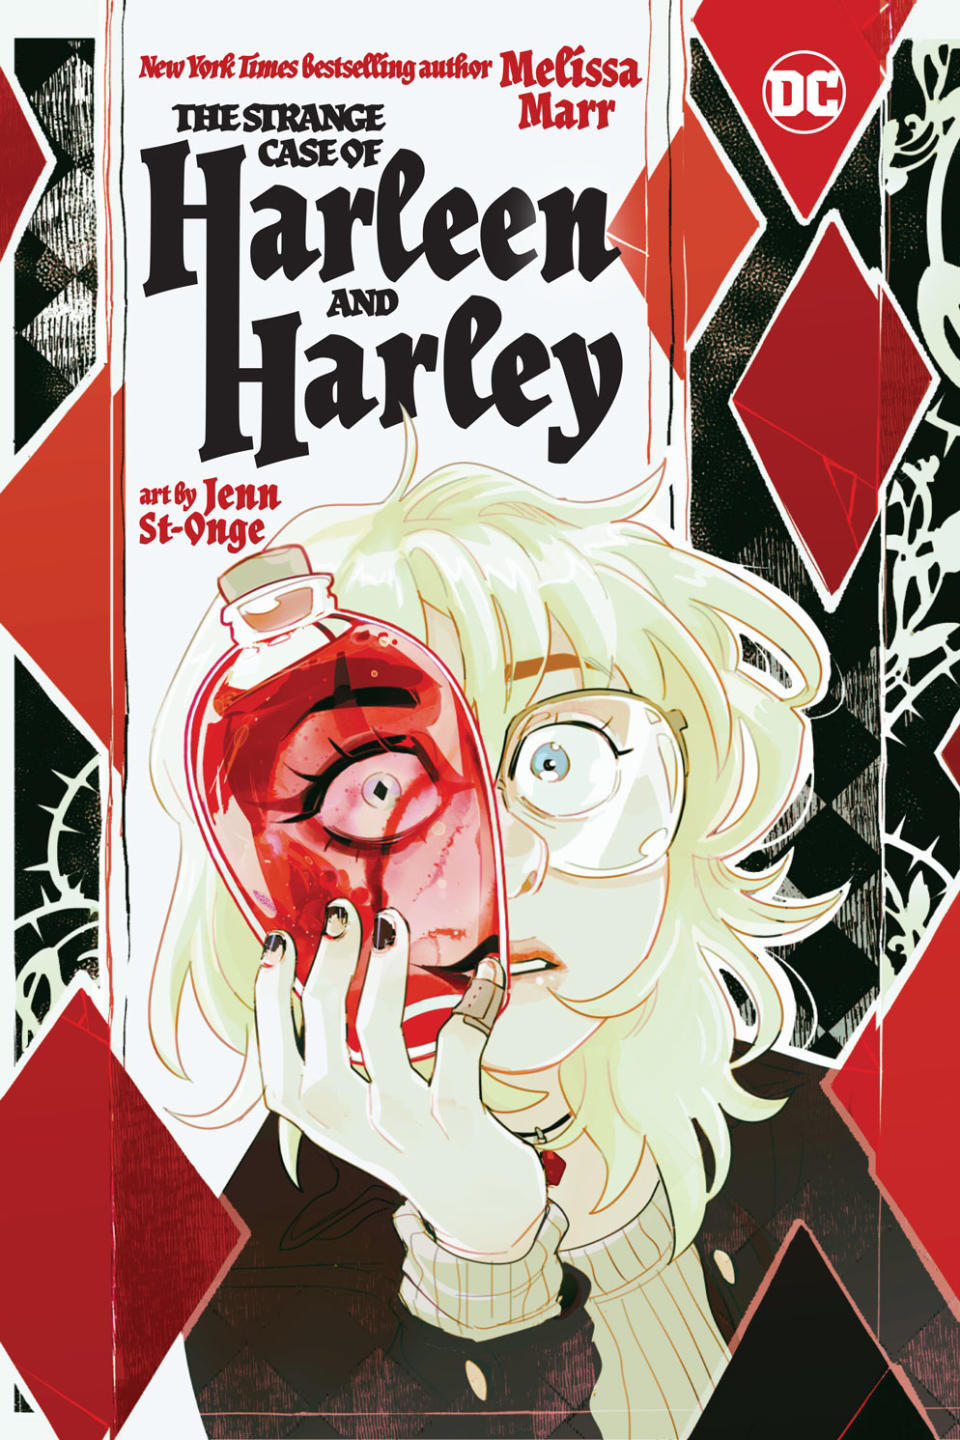 Art from The Strange Case of Harleen and Harley